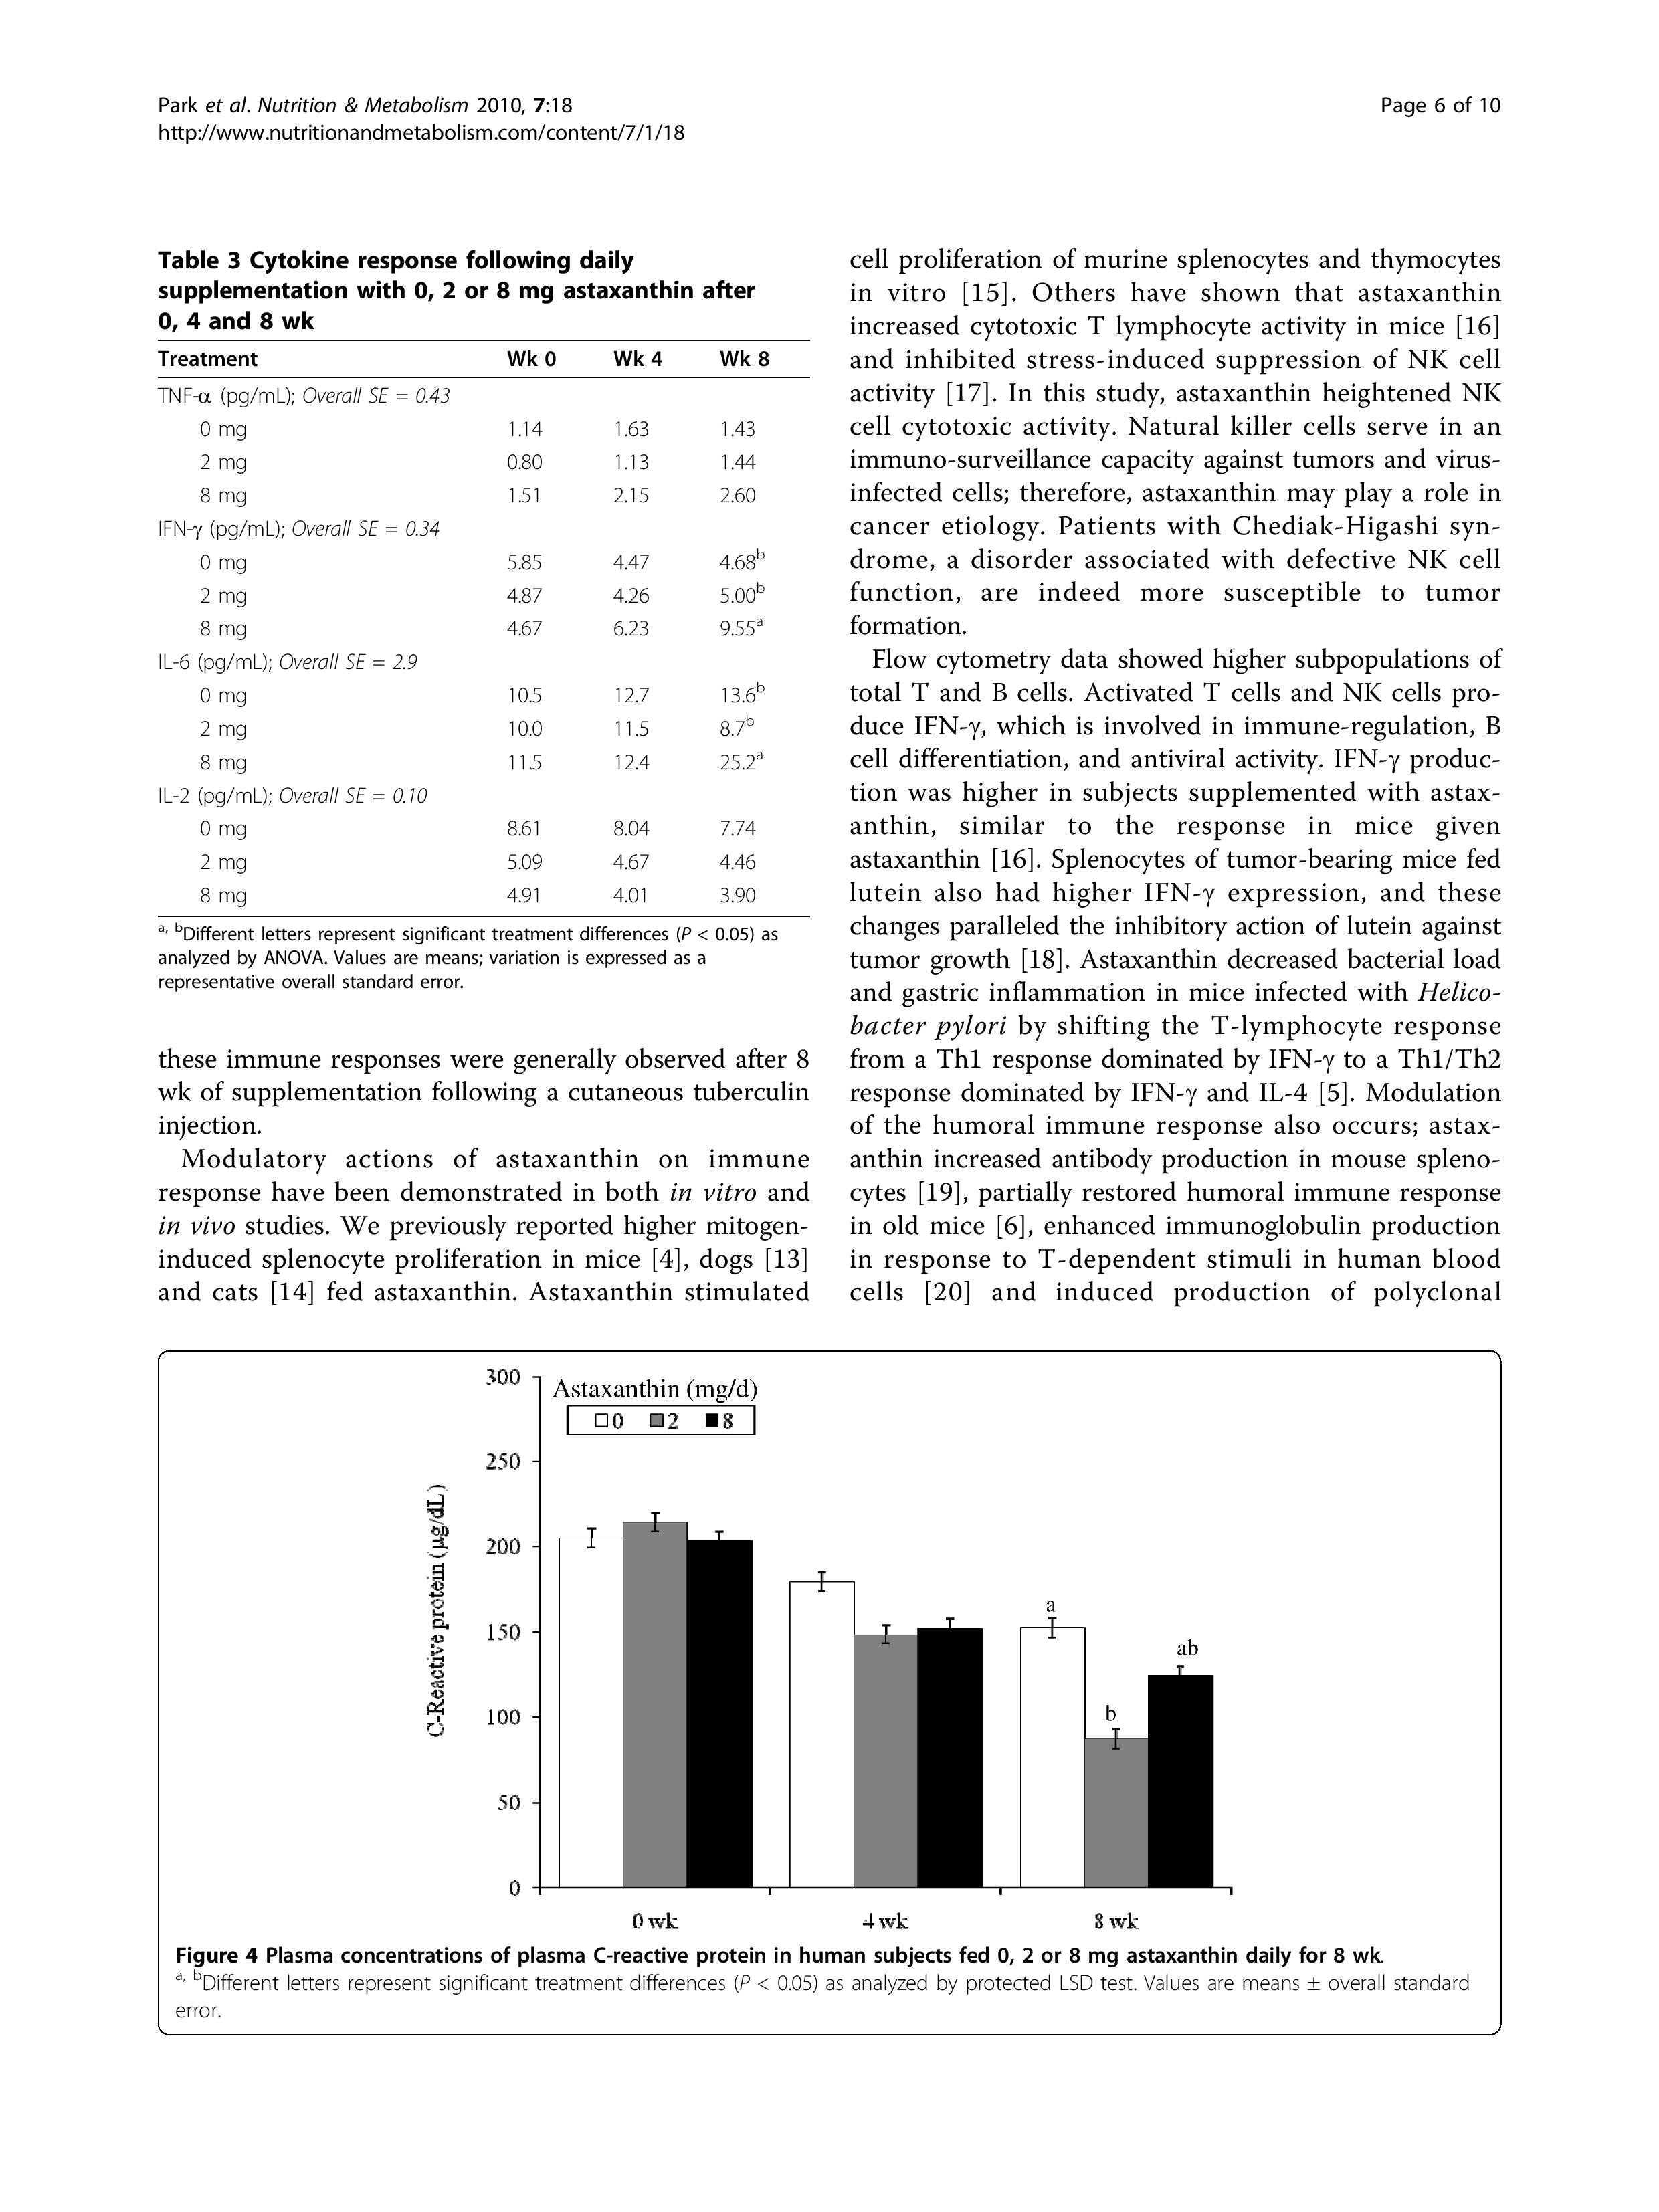 AX Enhance Immune Response-Park2010-page-006